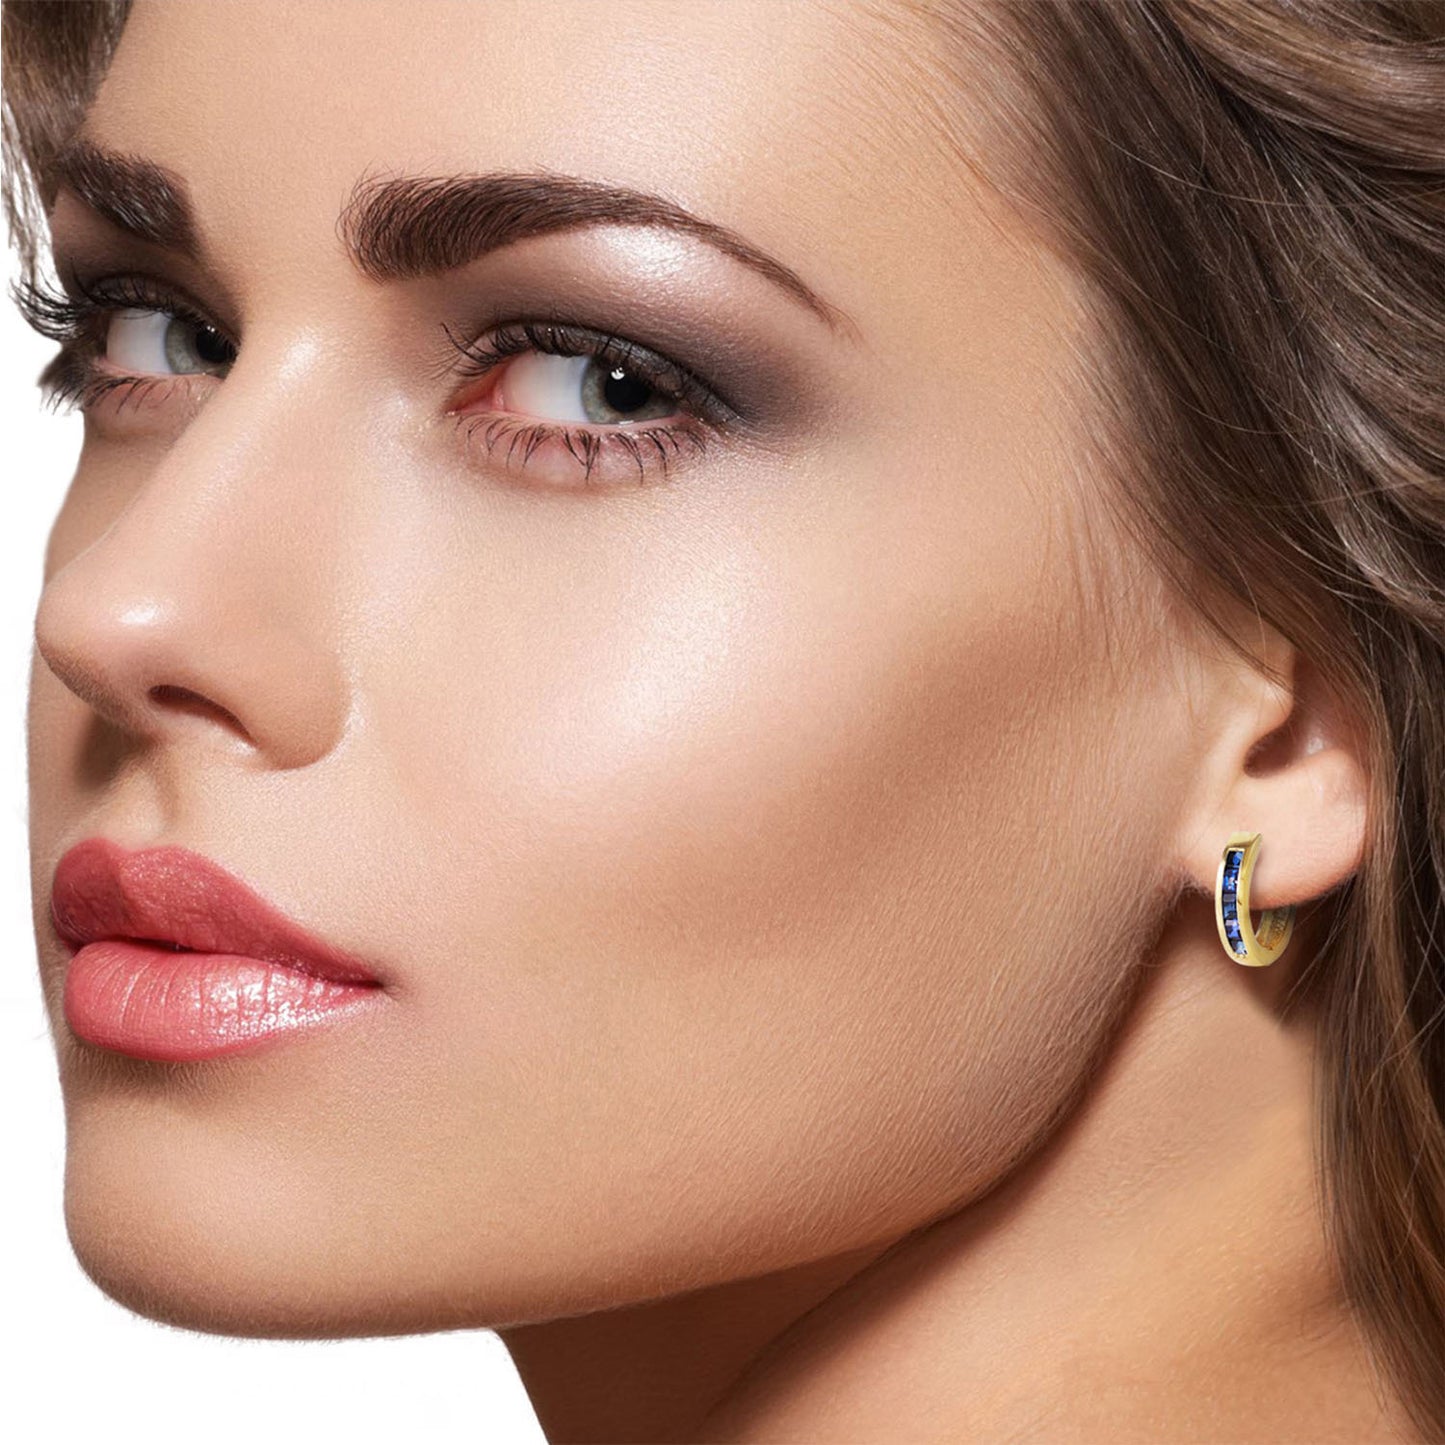 1.3 Carat 14K Solid Gold Hoop Earrings Natural Sapphire